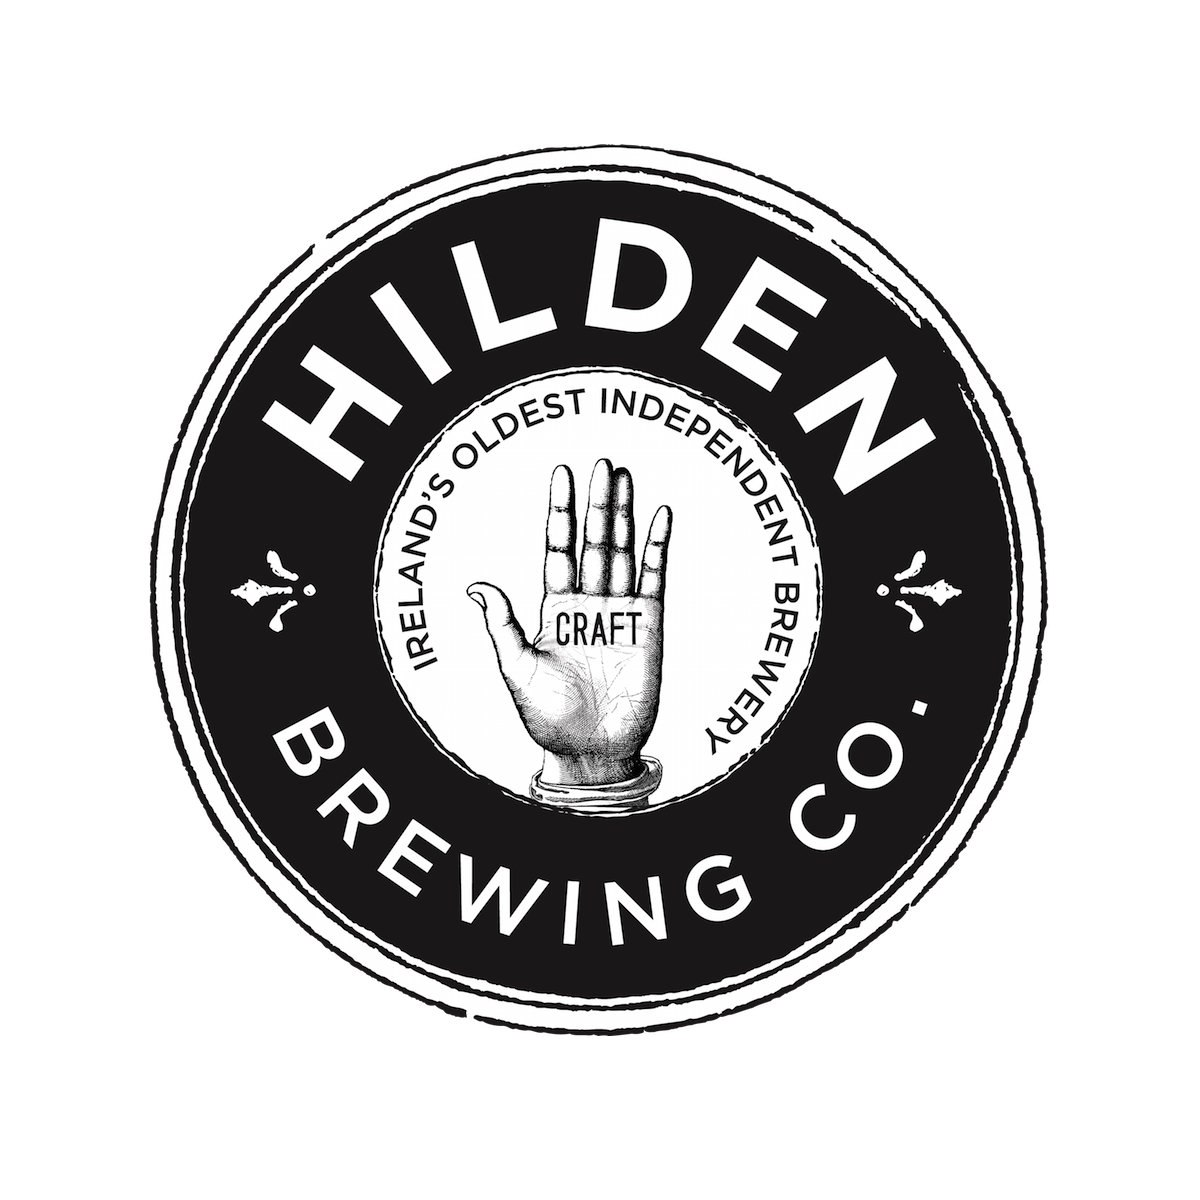 Hilden Brewing Co brand logo